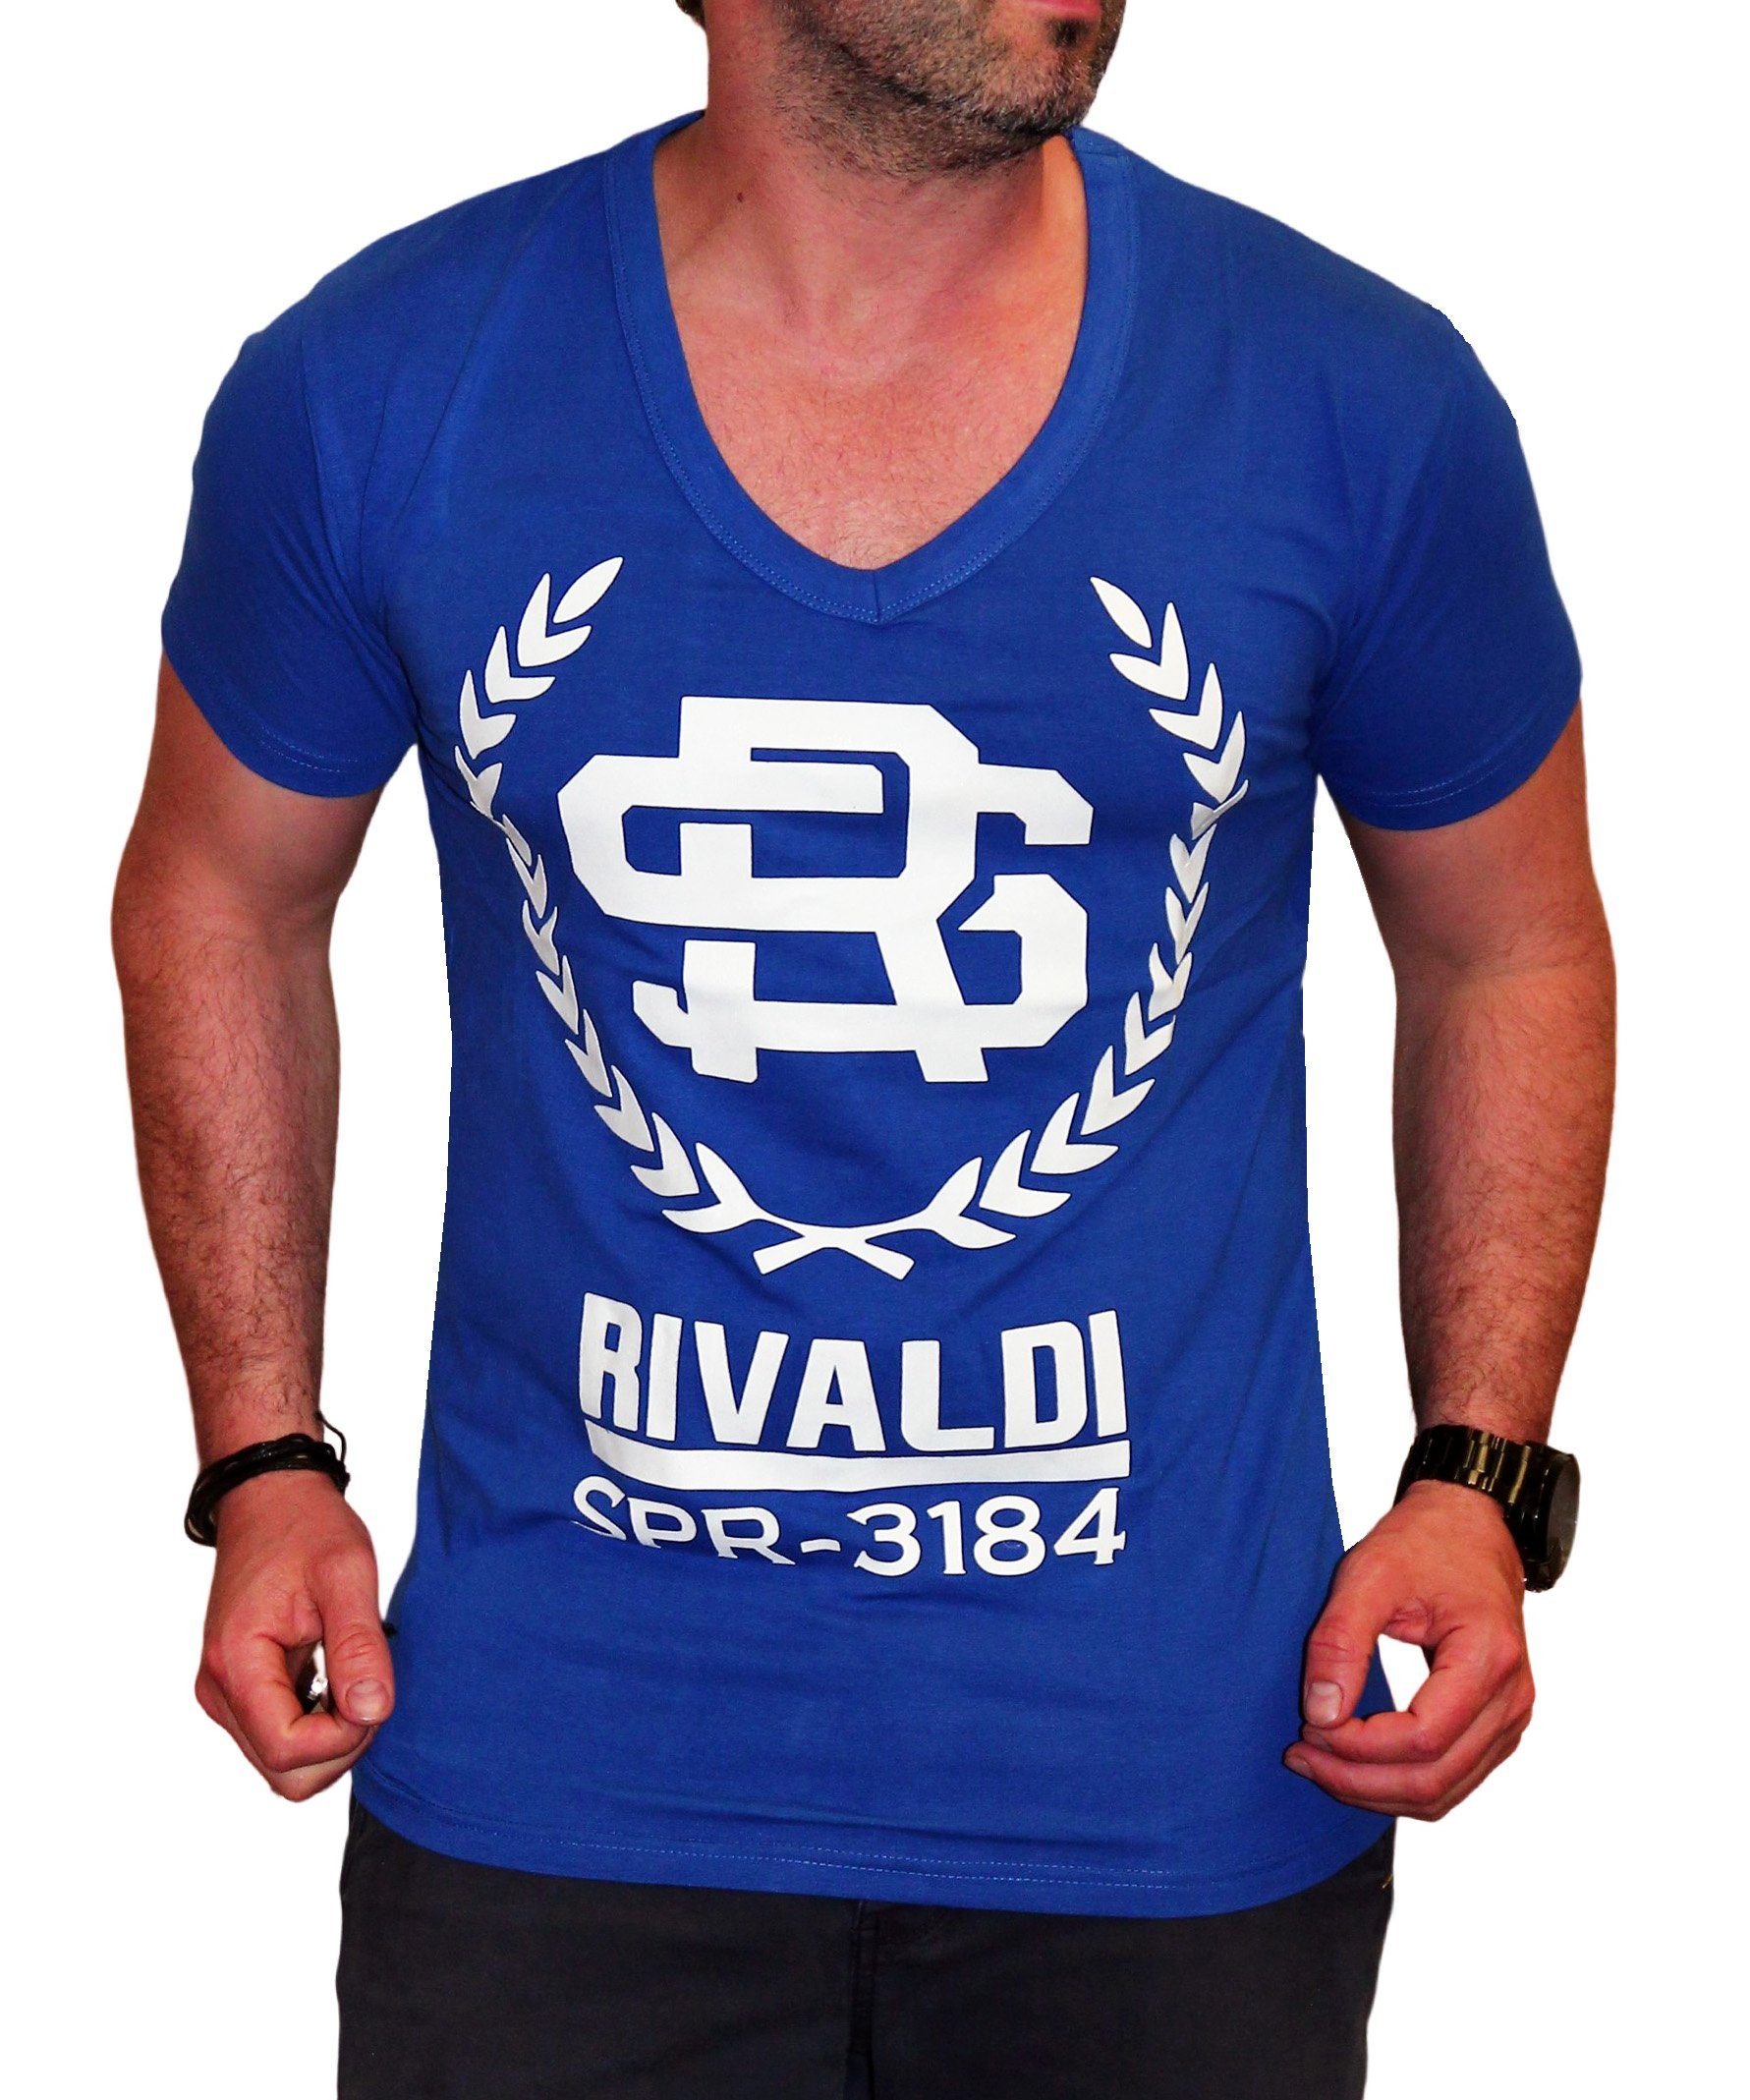 RMK T-Shirt Herren Shirt T-Shirt Polo Urlaub kurzarm Slim-Fit Baumwolle Rundhals Blau